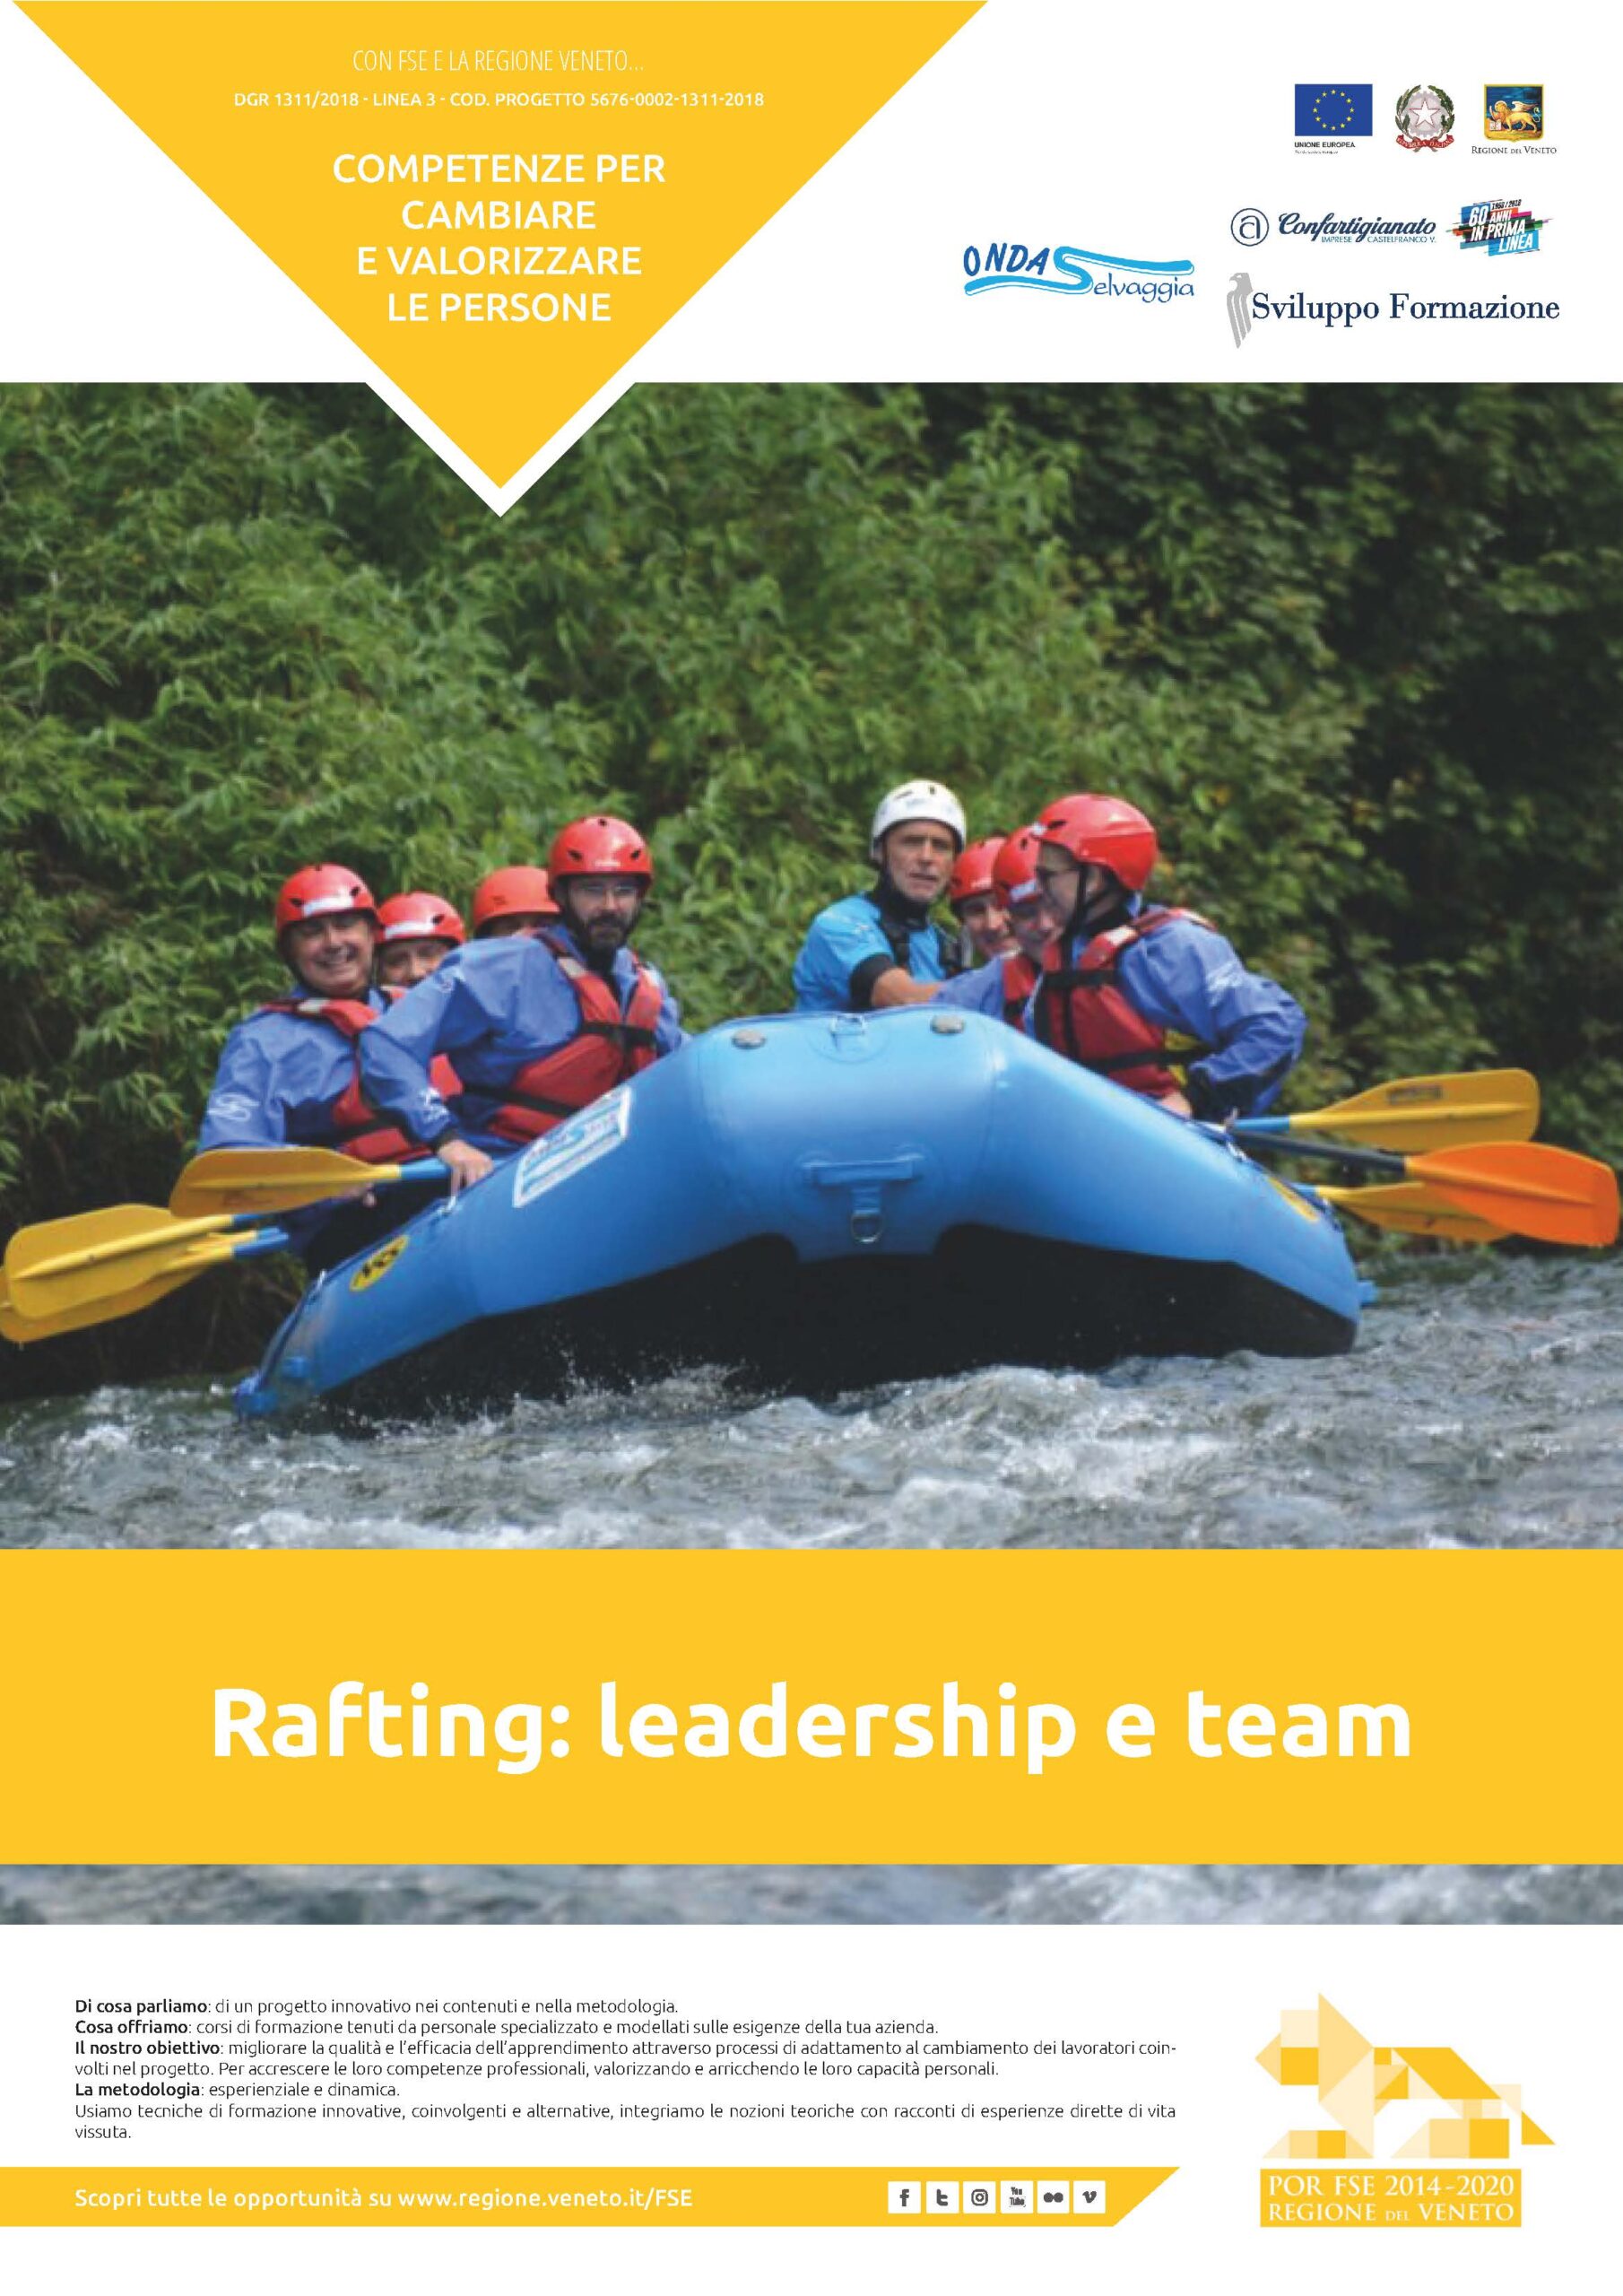 DGR 1311/2018: Rafting, leadership e team